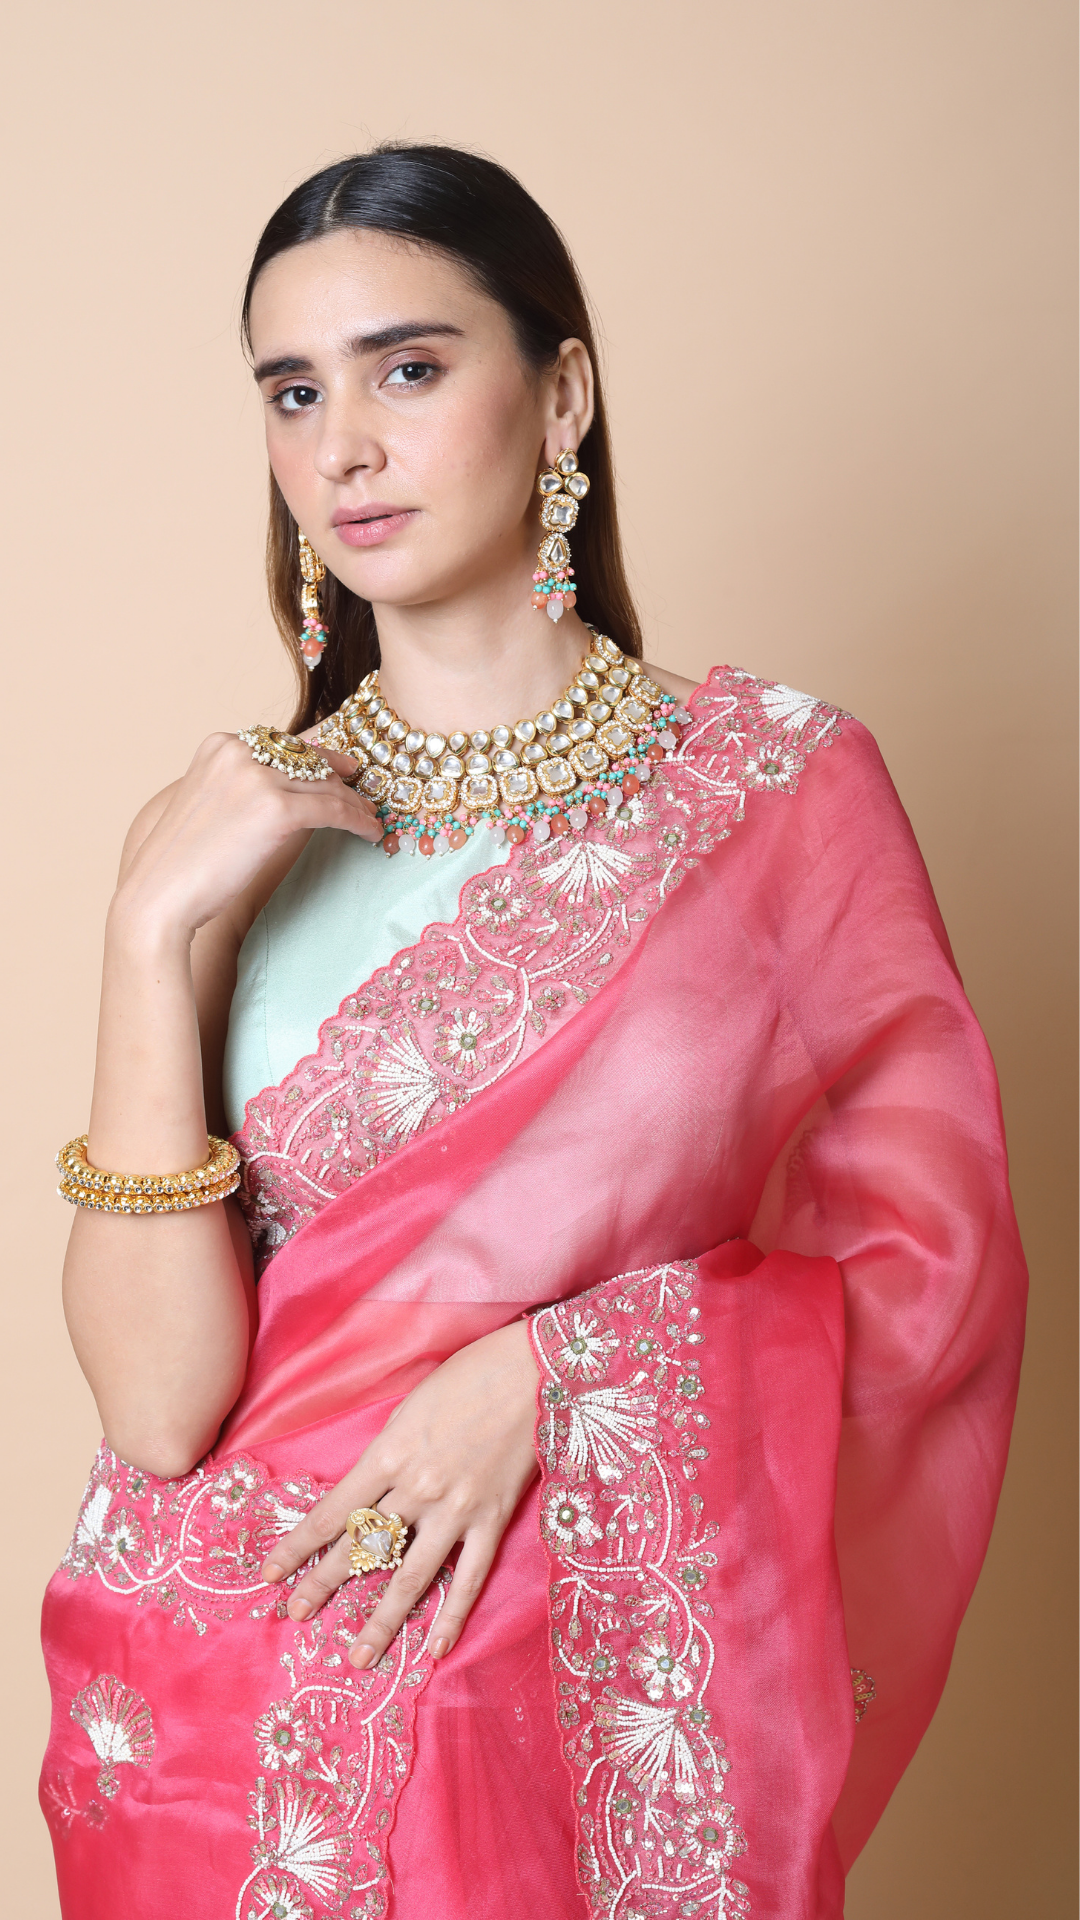 Aisha Sorbet Pink Saree with Heavy Intricate Border